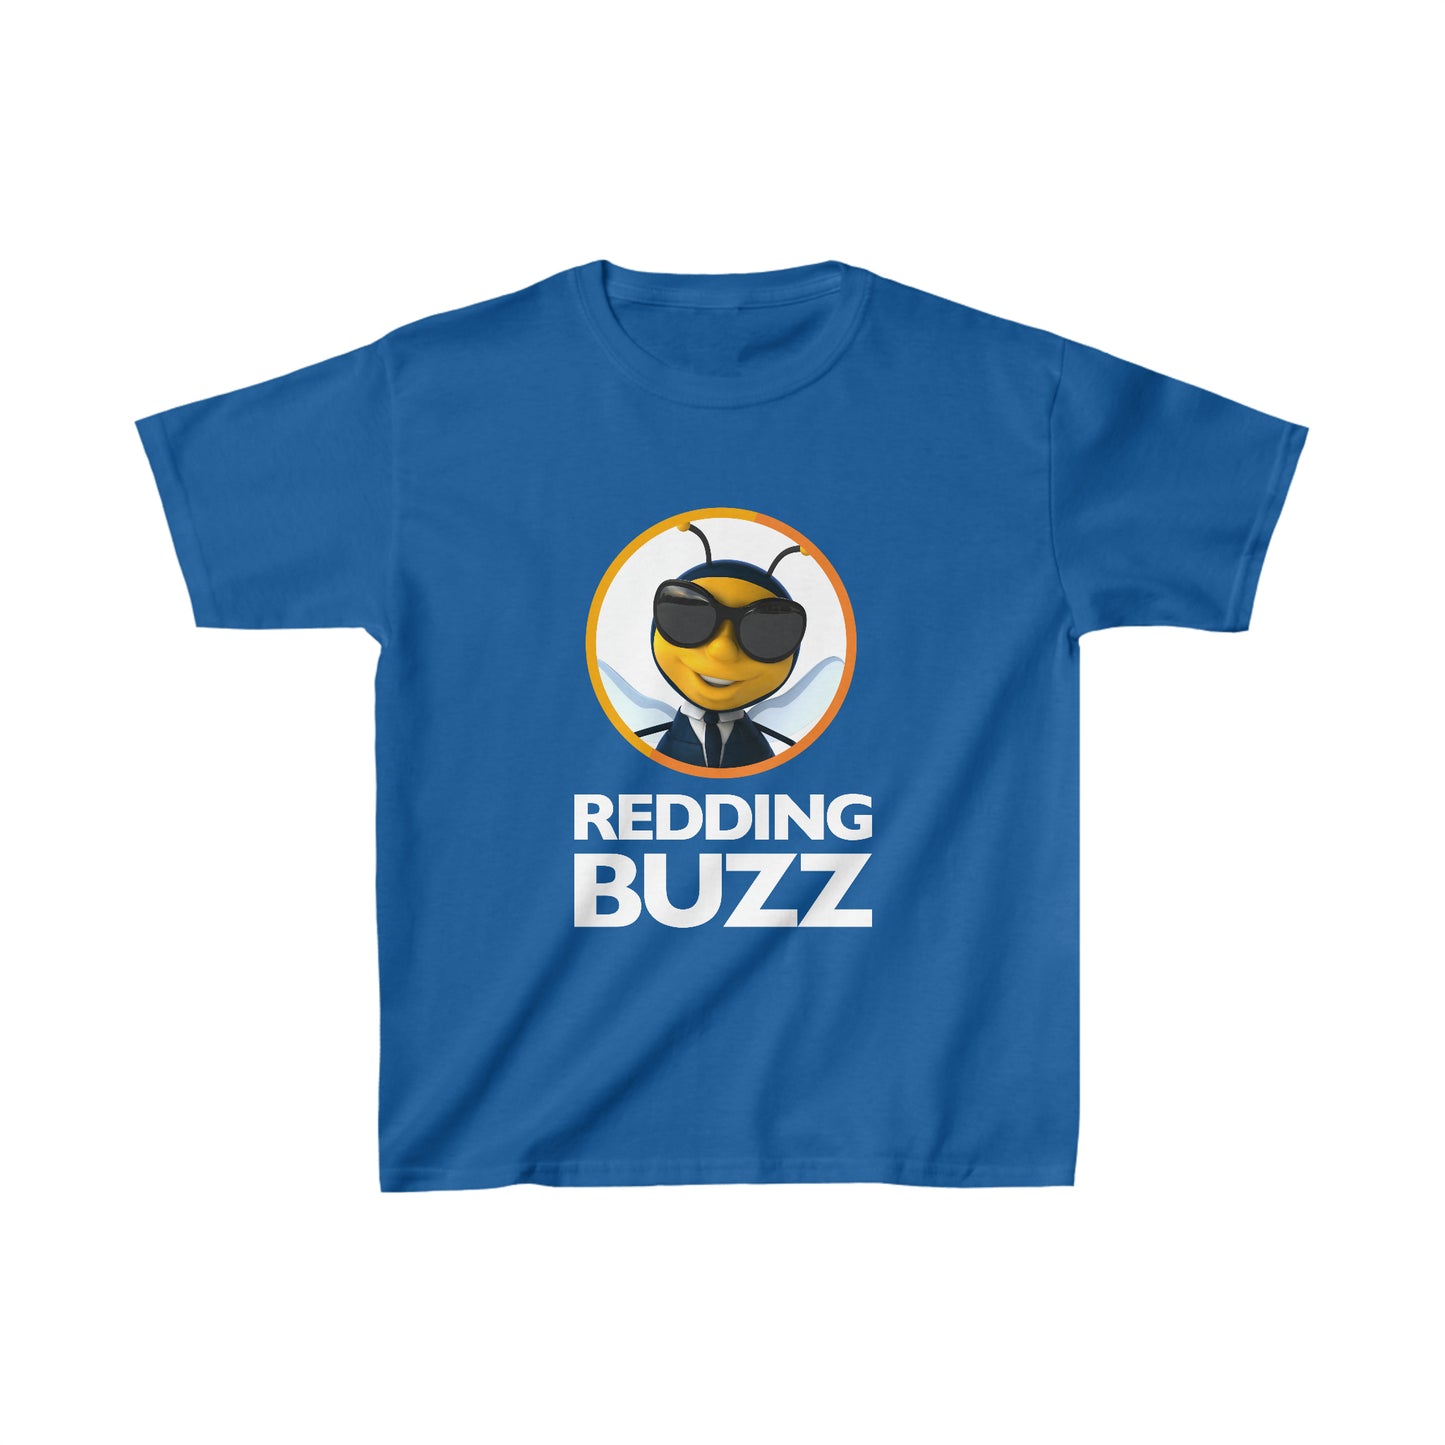 Little Bee's Comfort Tee: Kids' Everyday Cotton Shirt